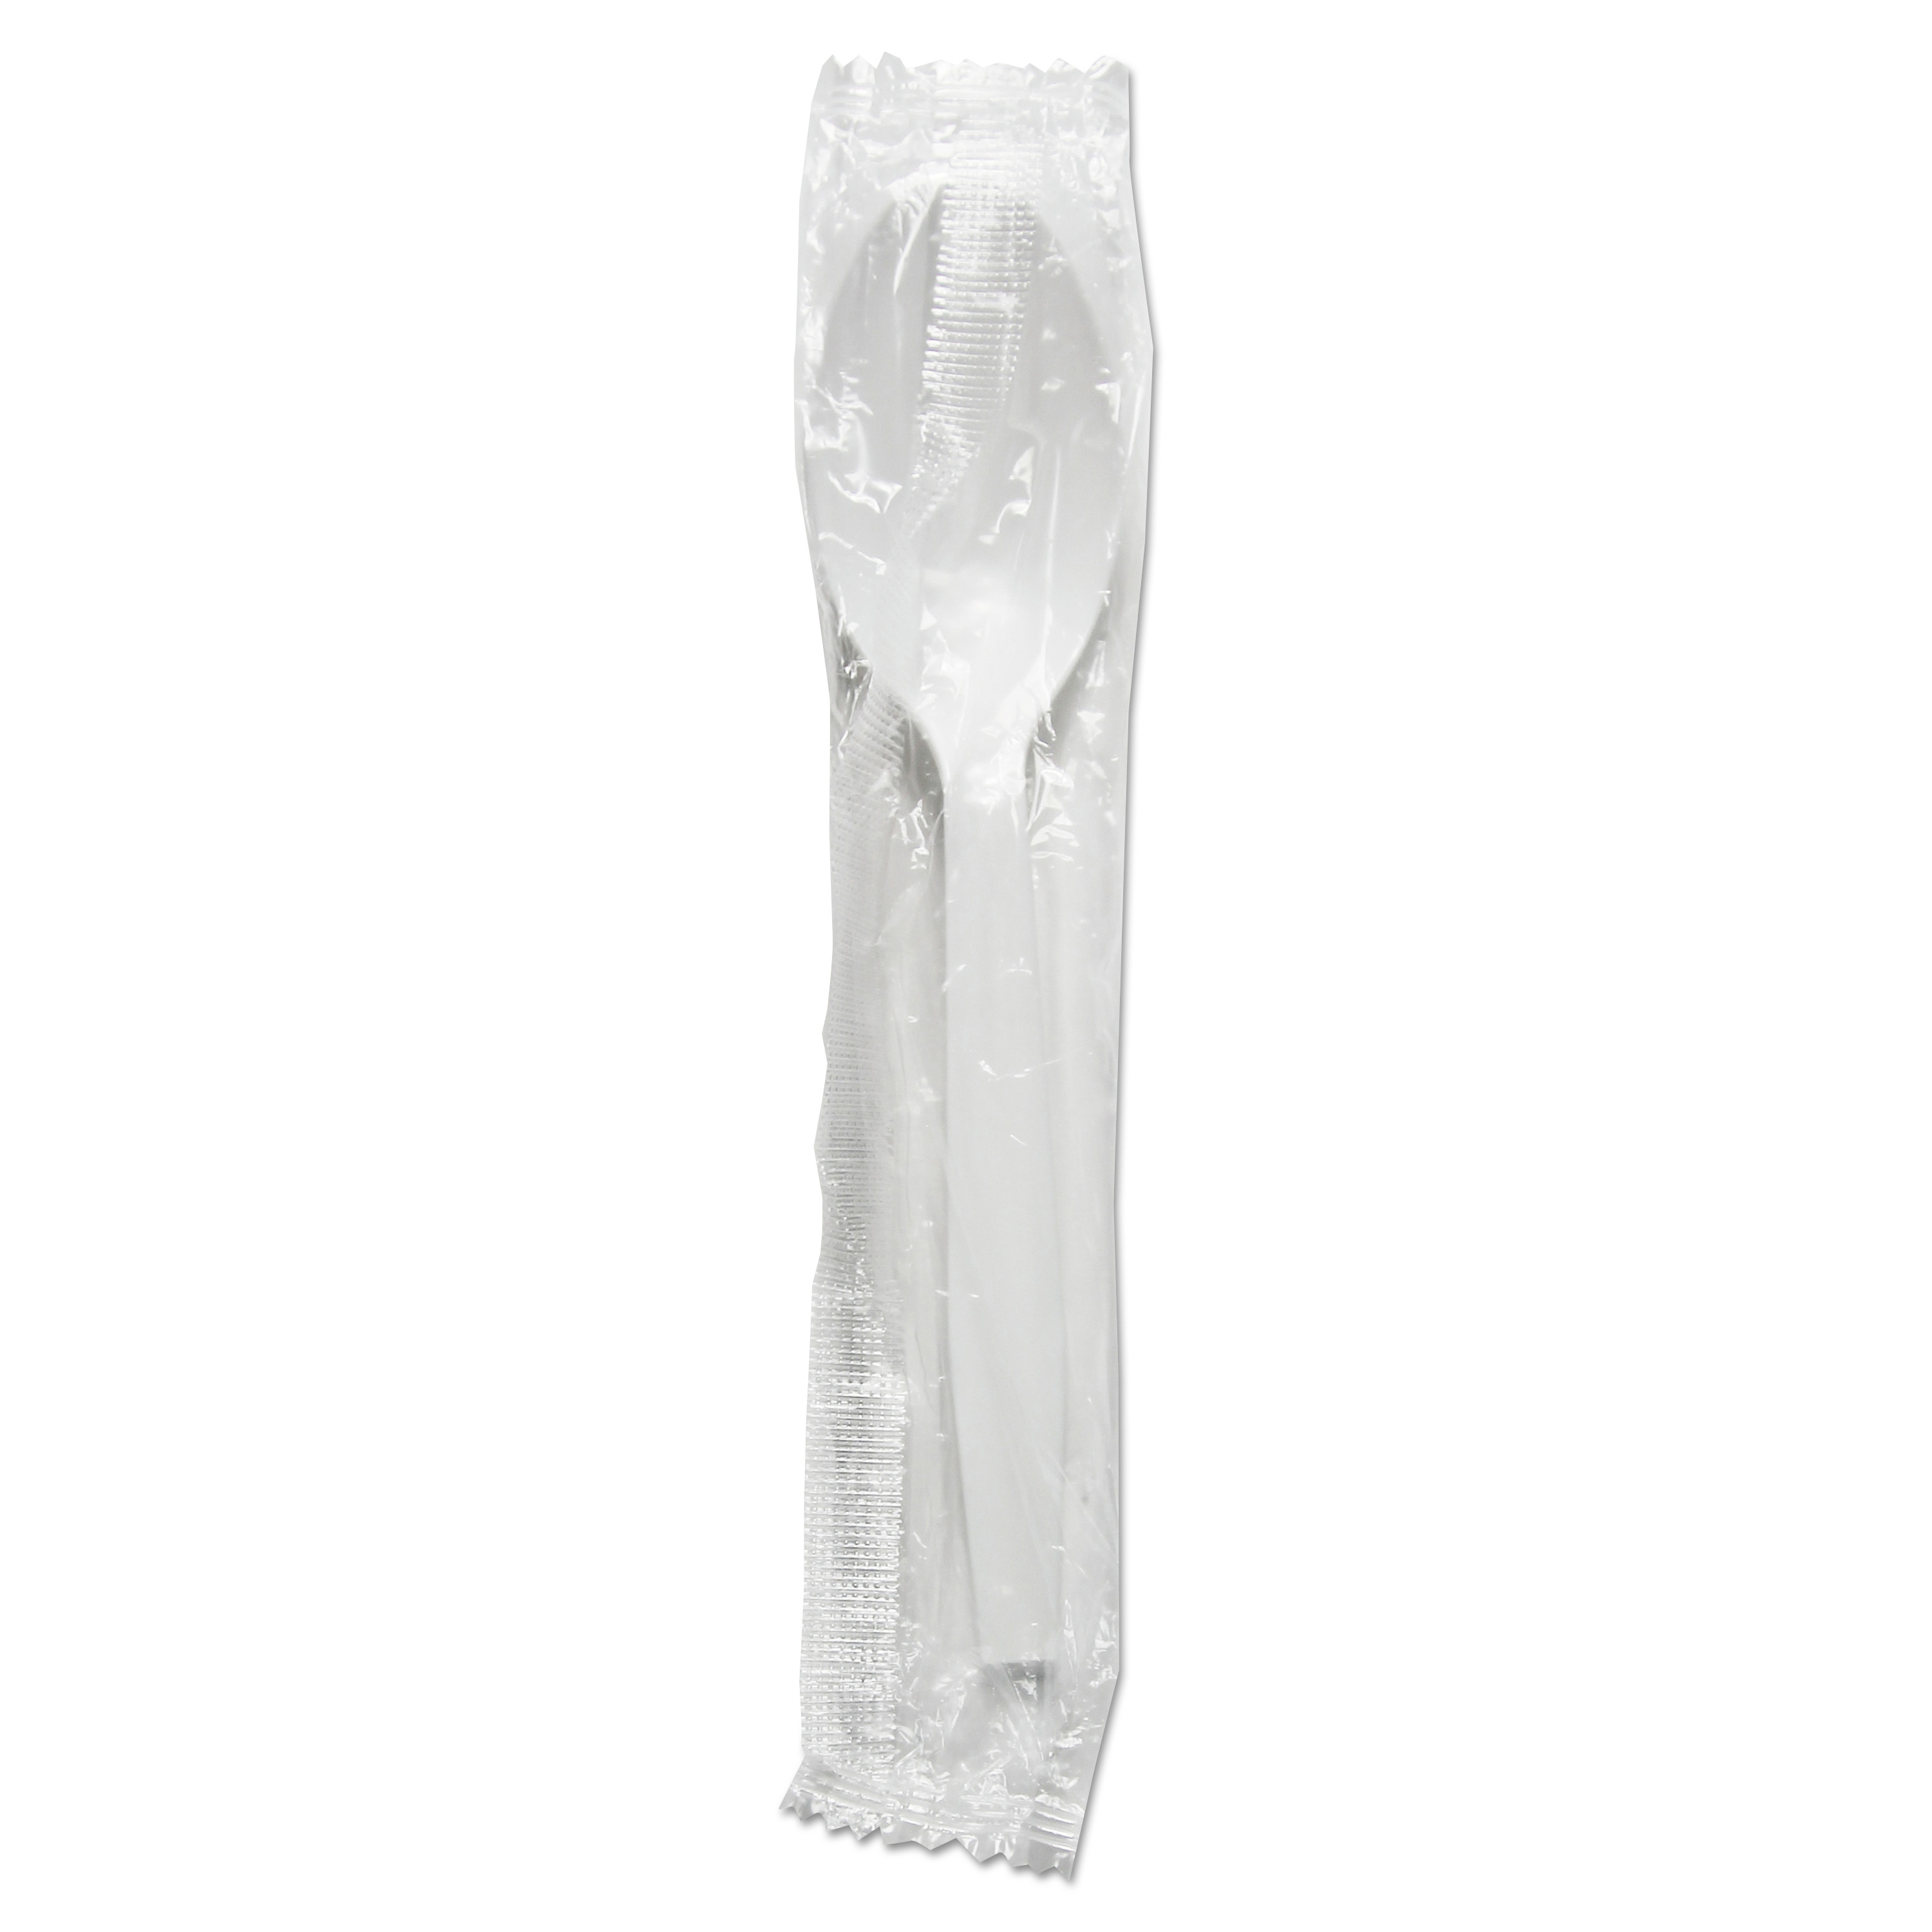 Mediumweight Wrapped Polystyrene Cutlery, Teaspoon, White, 1000/Carton